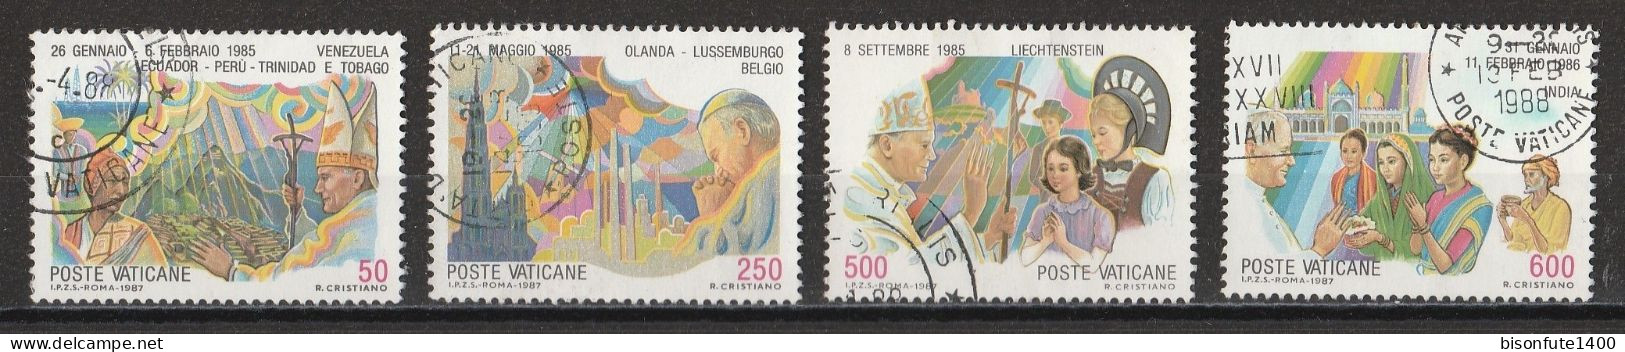 Vatican 1987 : Timbres Yvert & Tellier N° 817 - 818 - 820 - 821 - 822 - 823 Et 824 Oblitérés. - Used Stamps